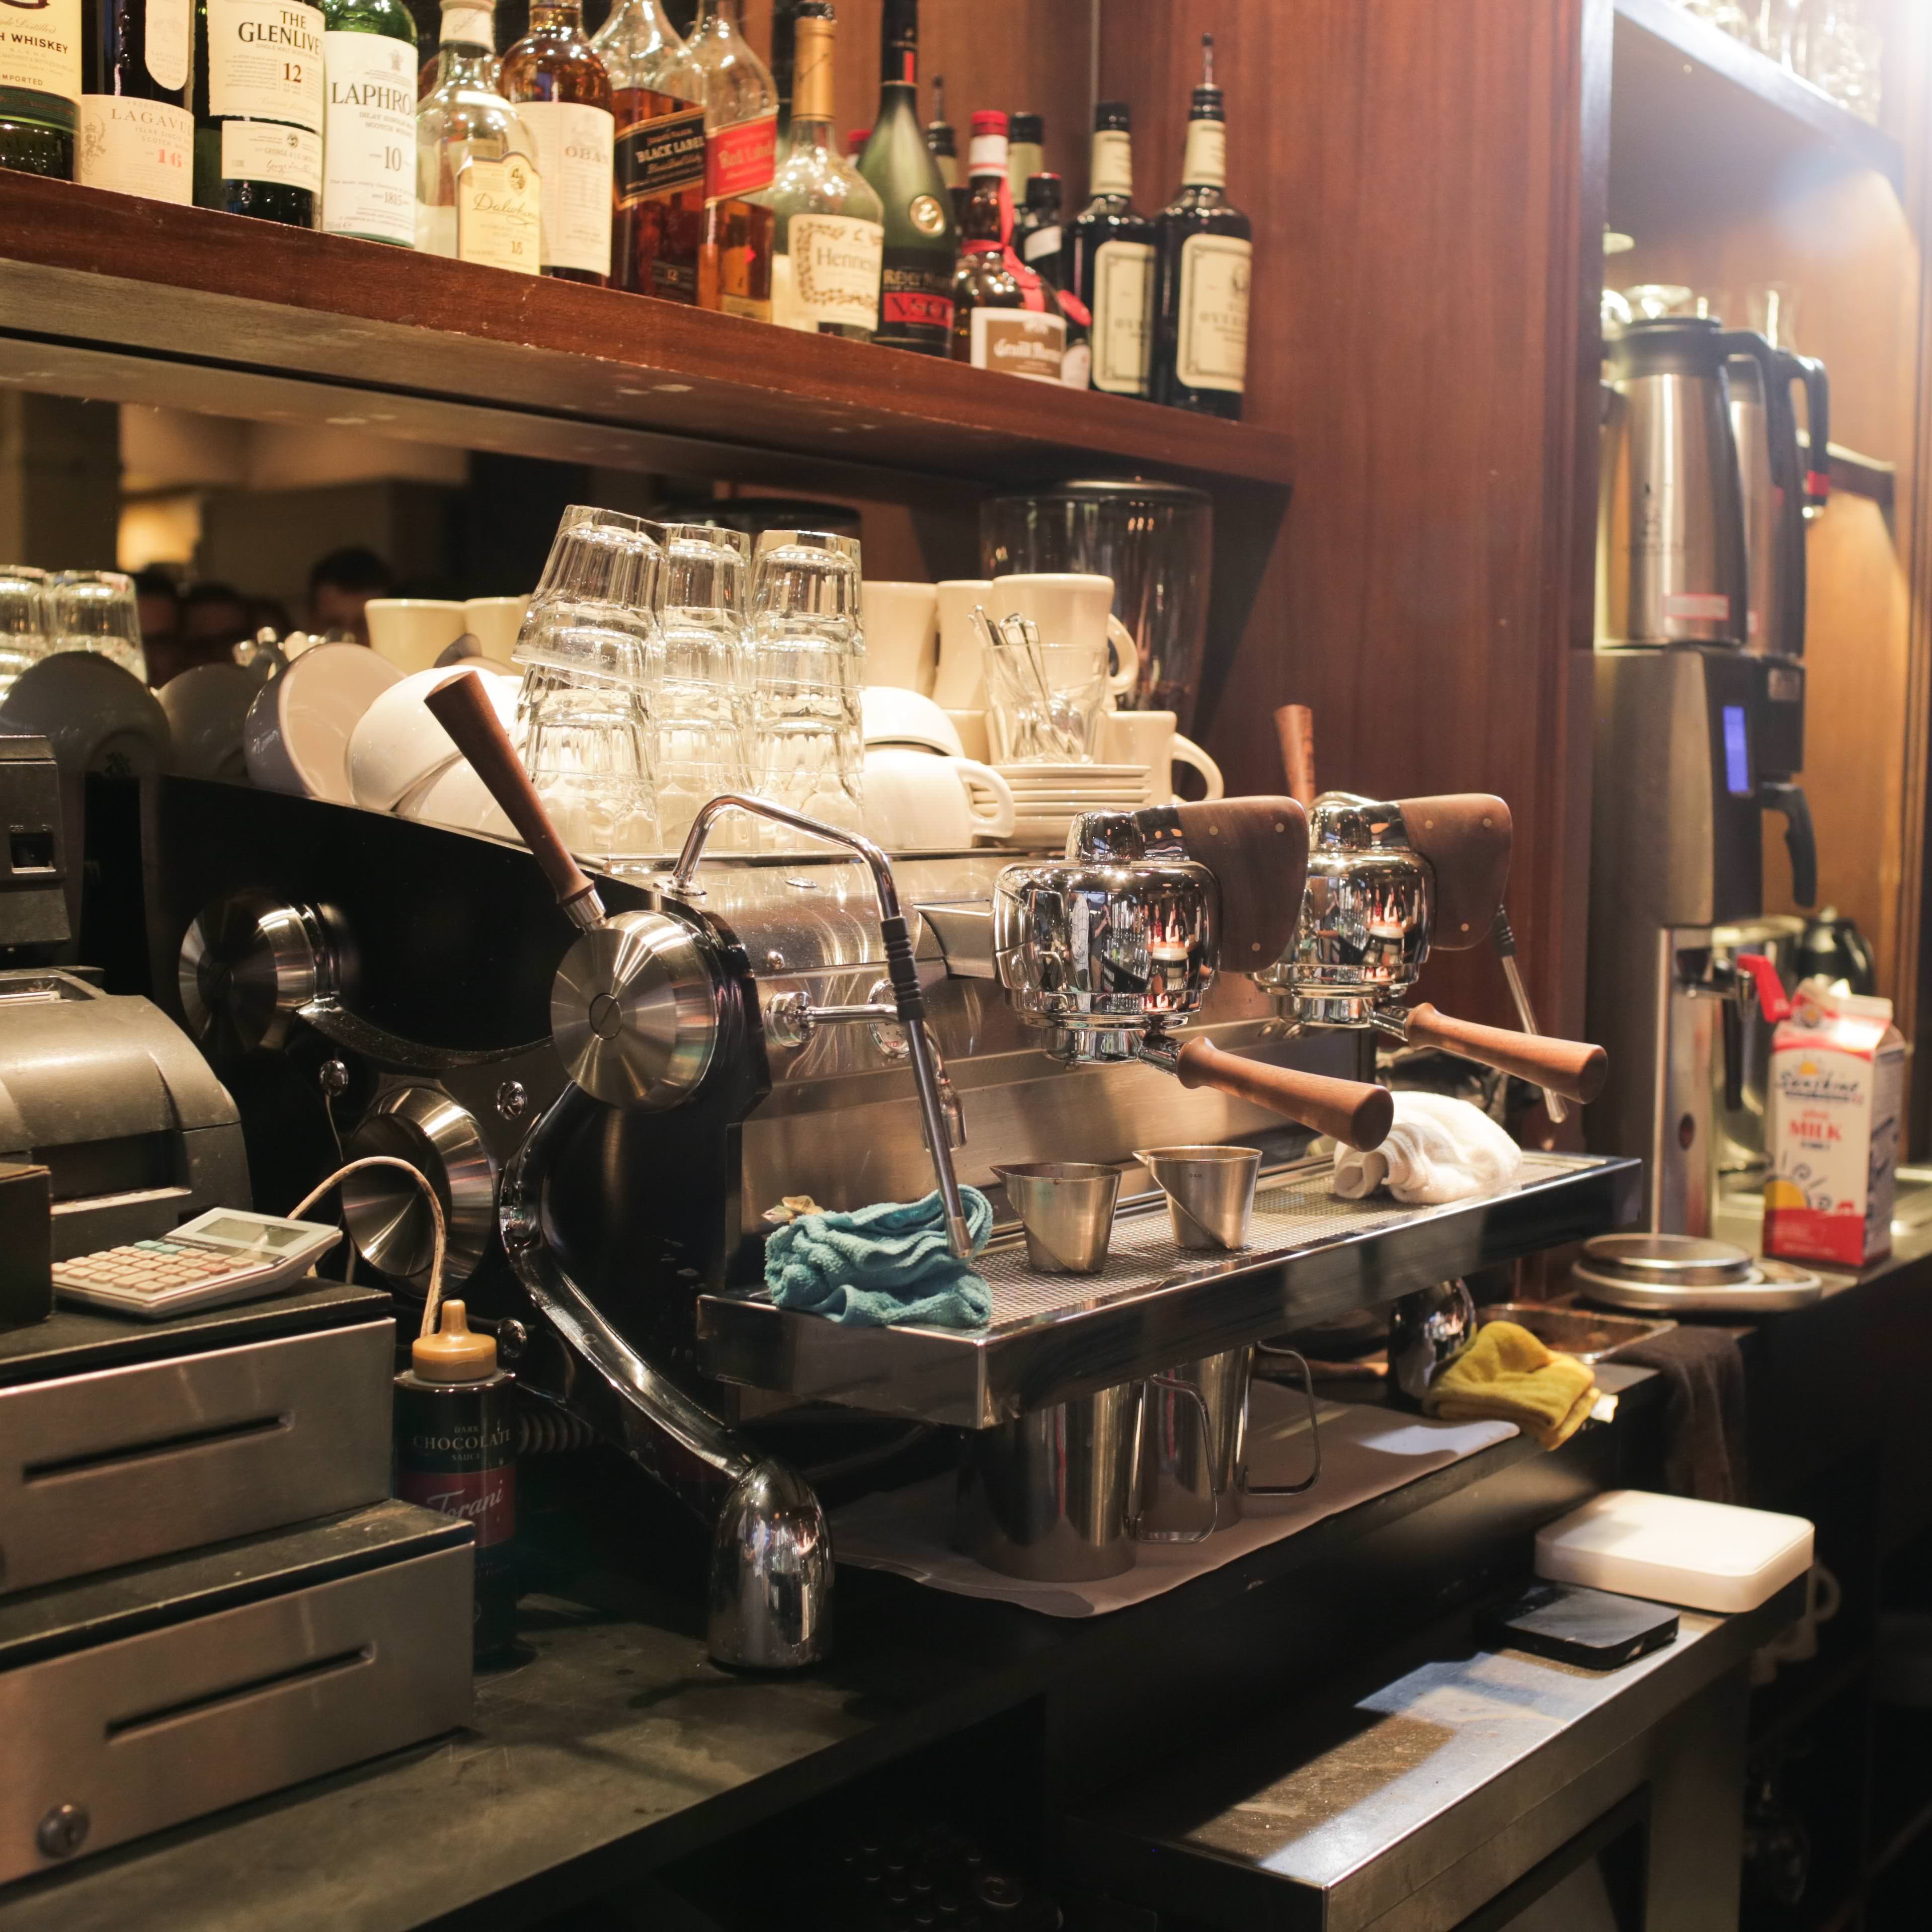 Coastal Kitchen, Slayer Espresso newly installed on the bar.